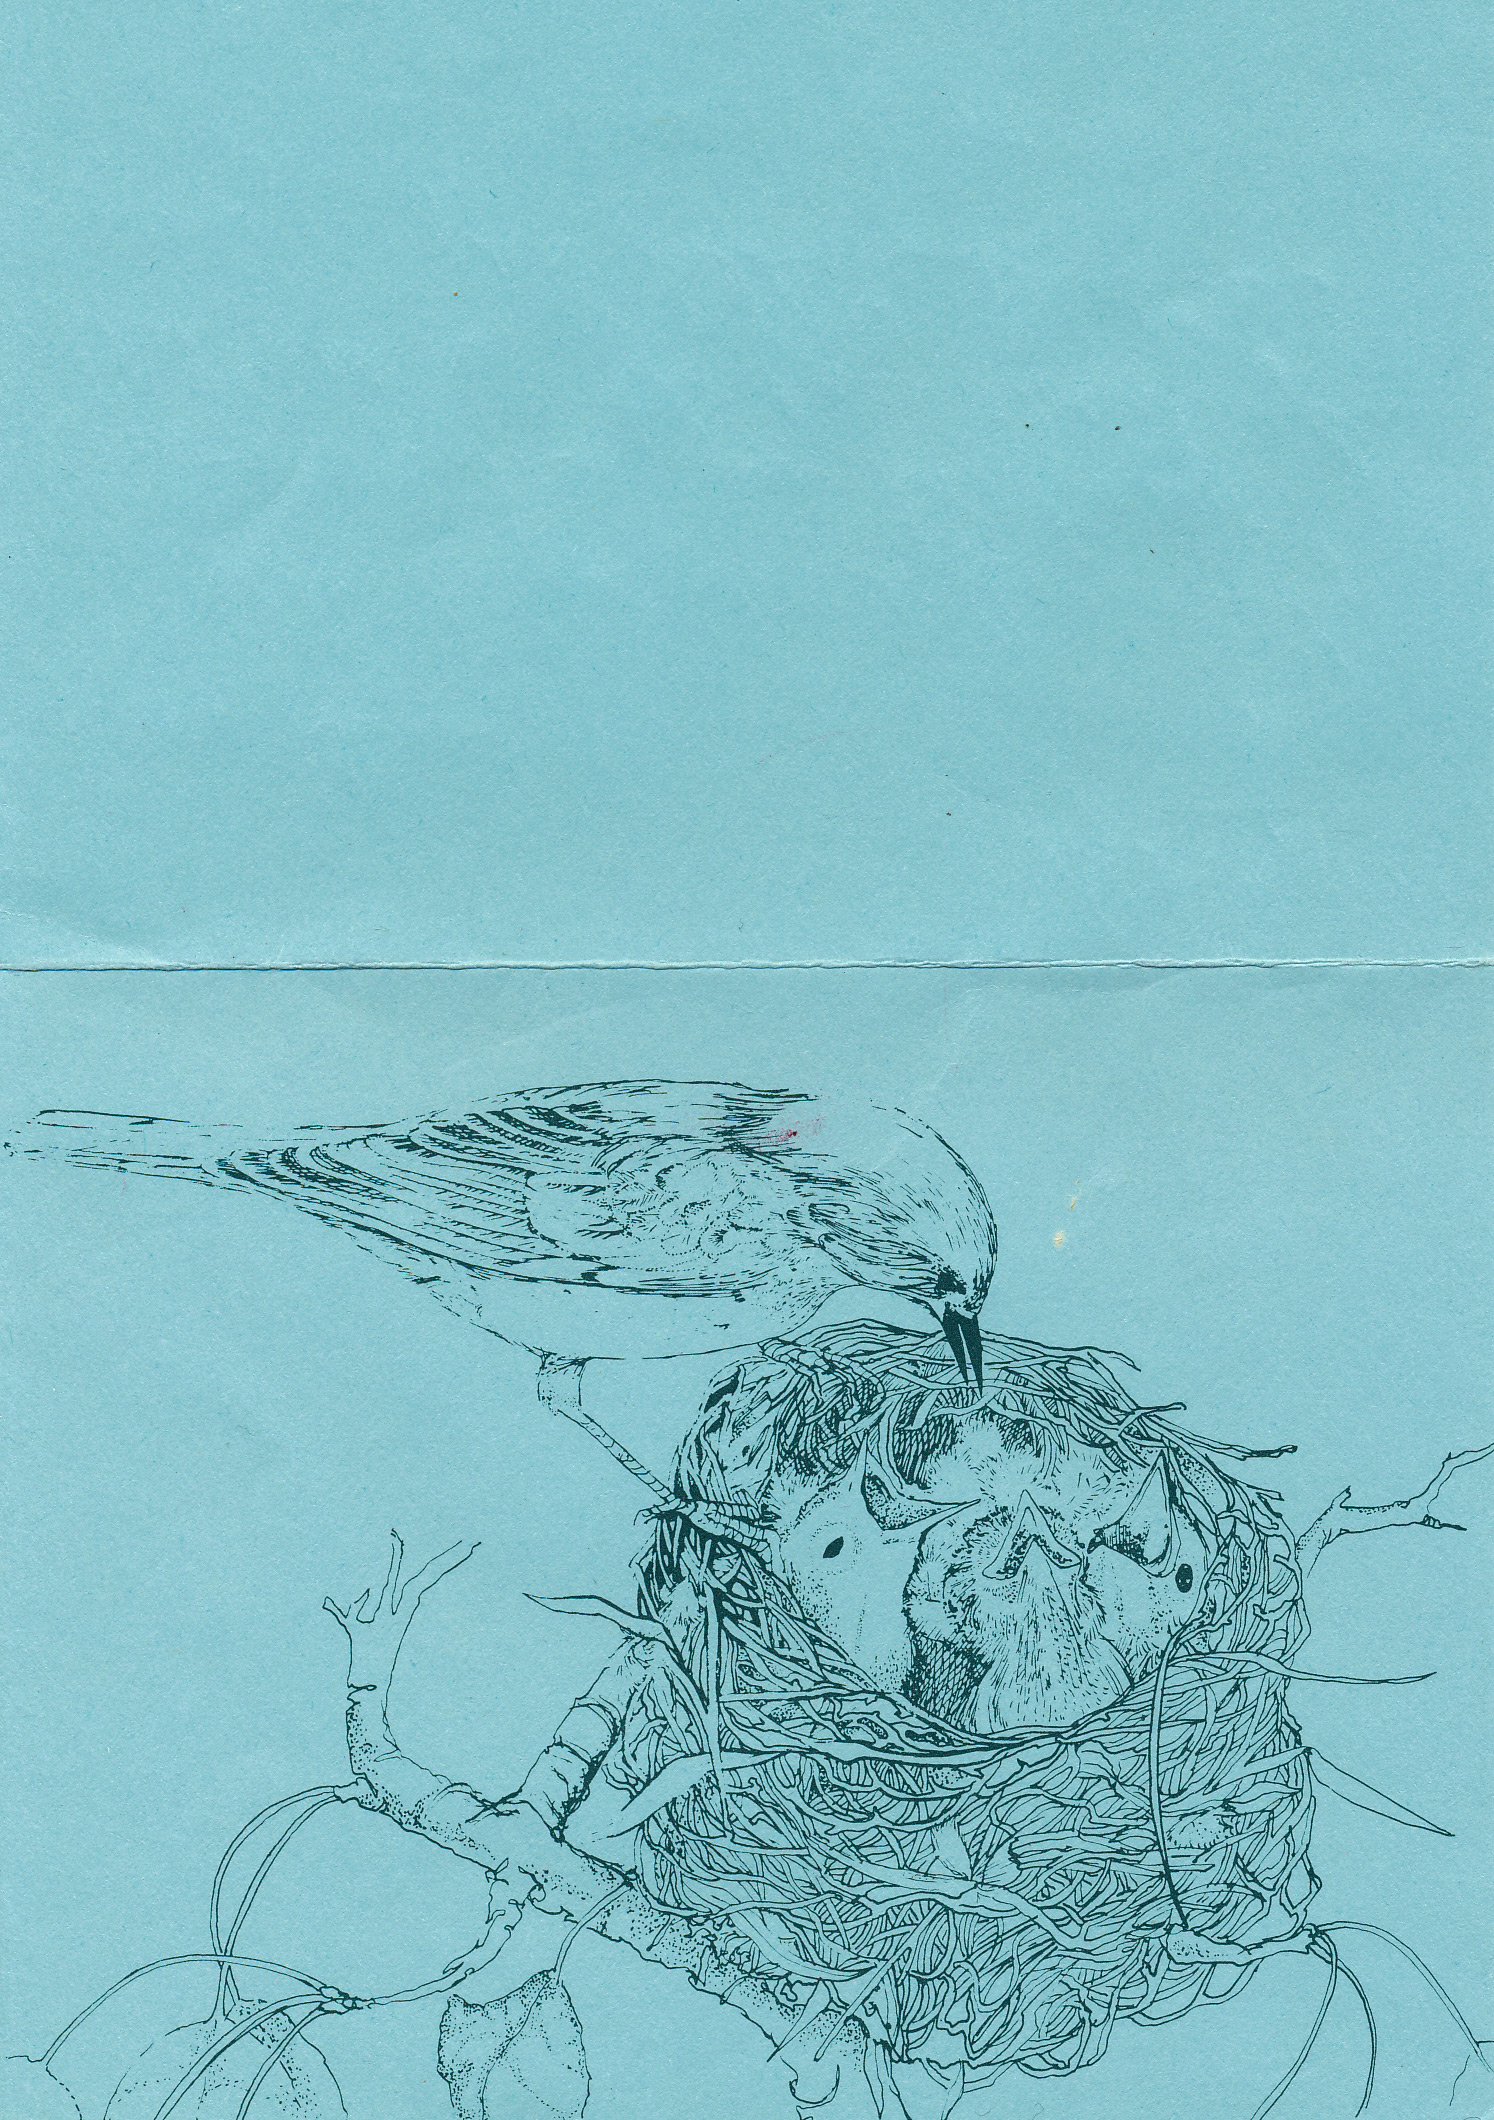 http://jrandomimage.com/images/bird-drawing.jpg